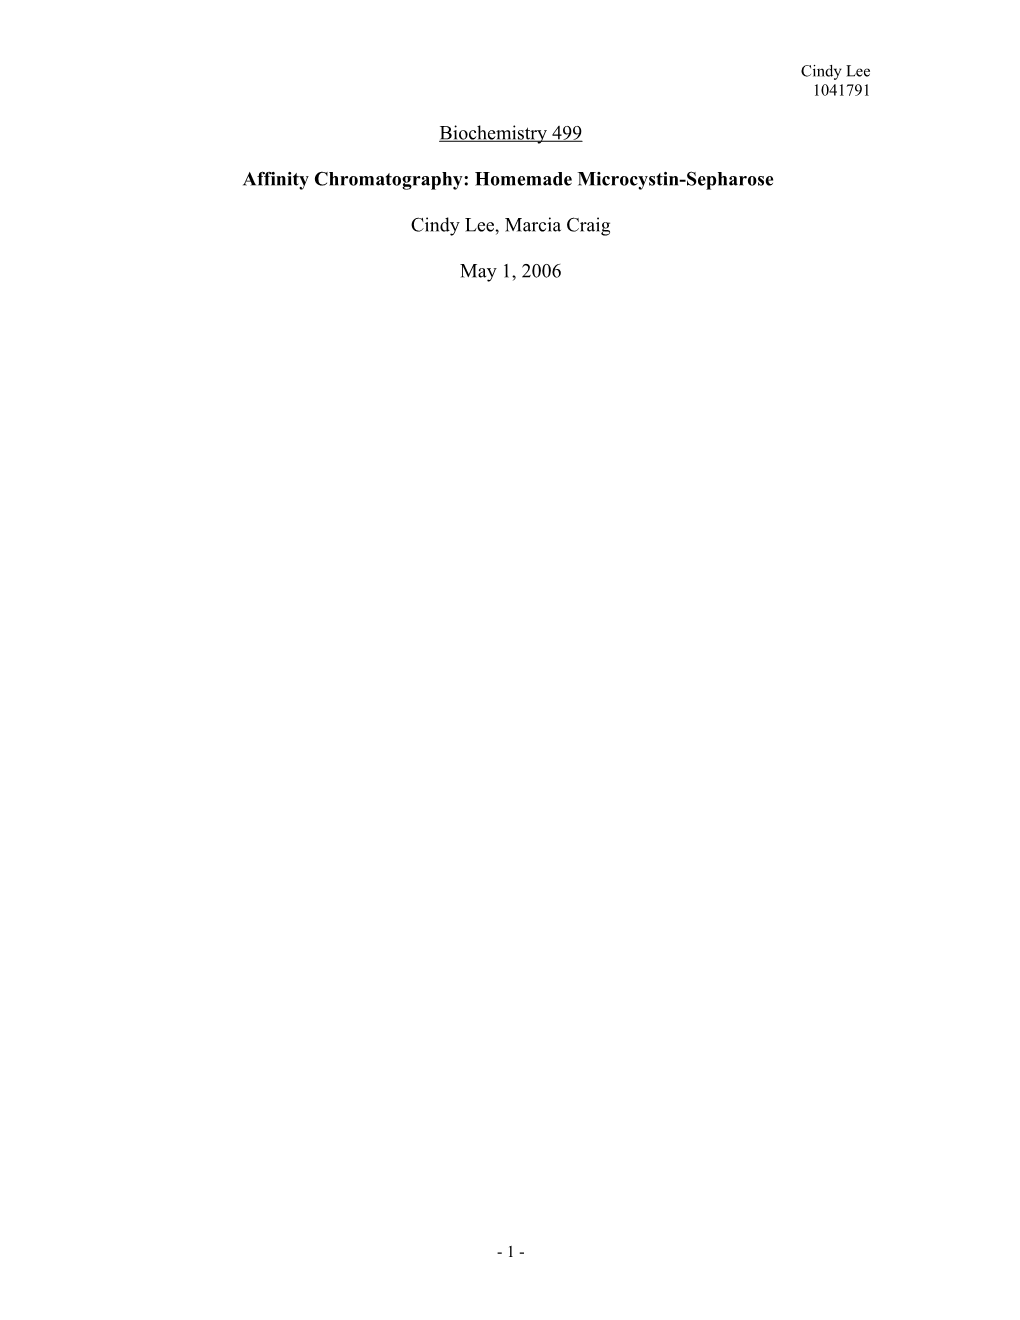 Affinity Chromatography: Homemade Microcystin-Sepharose